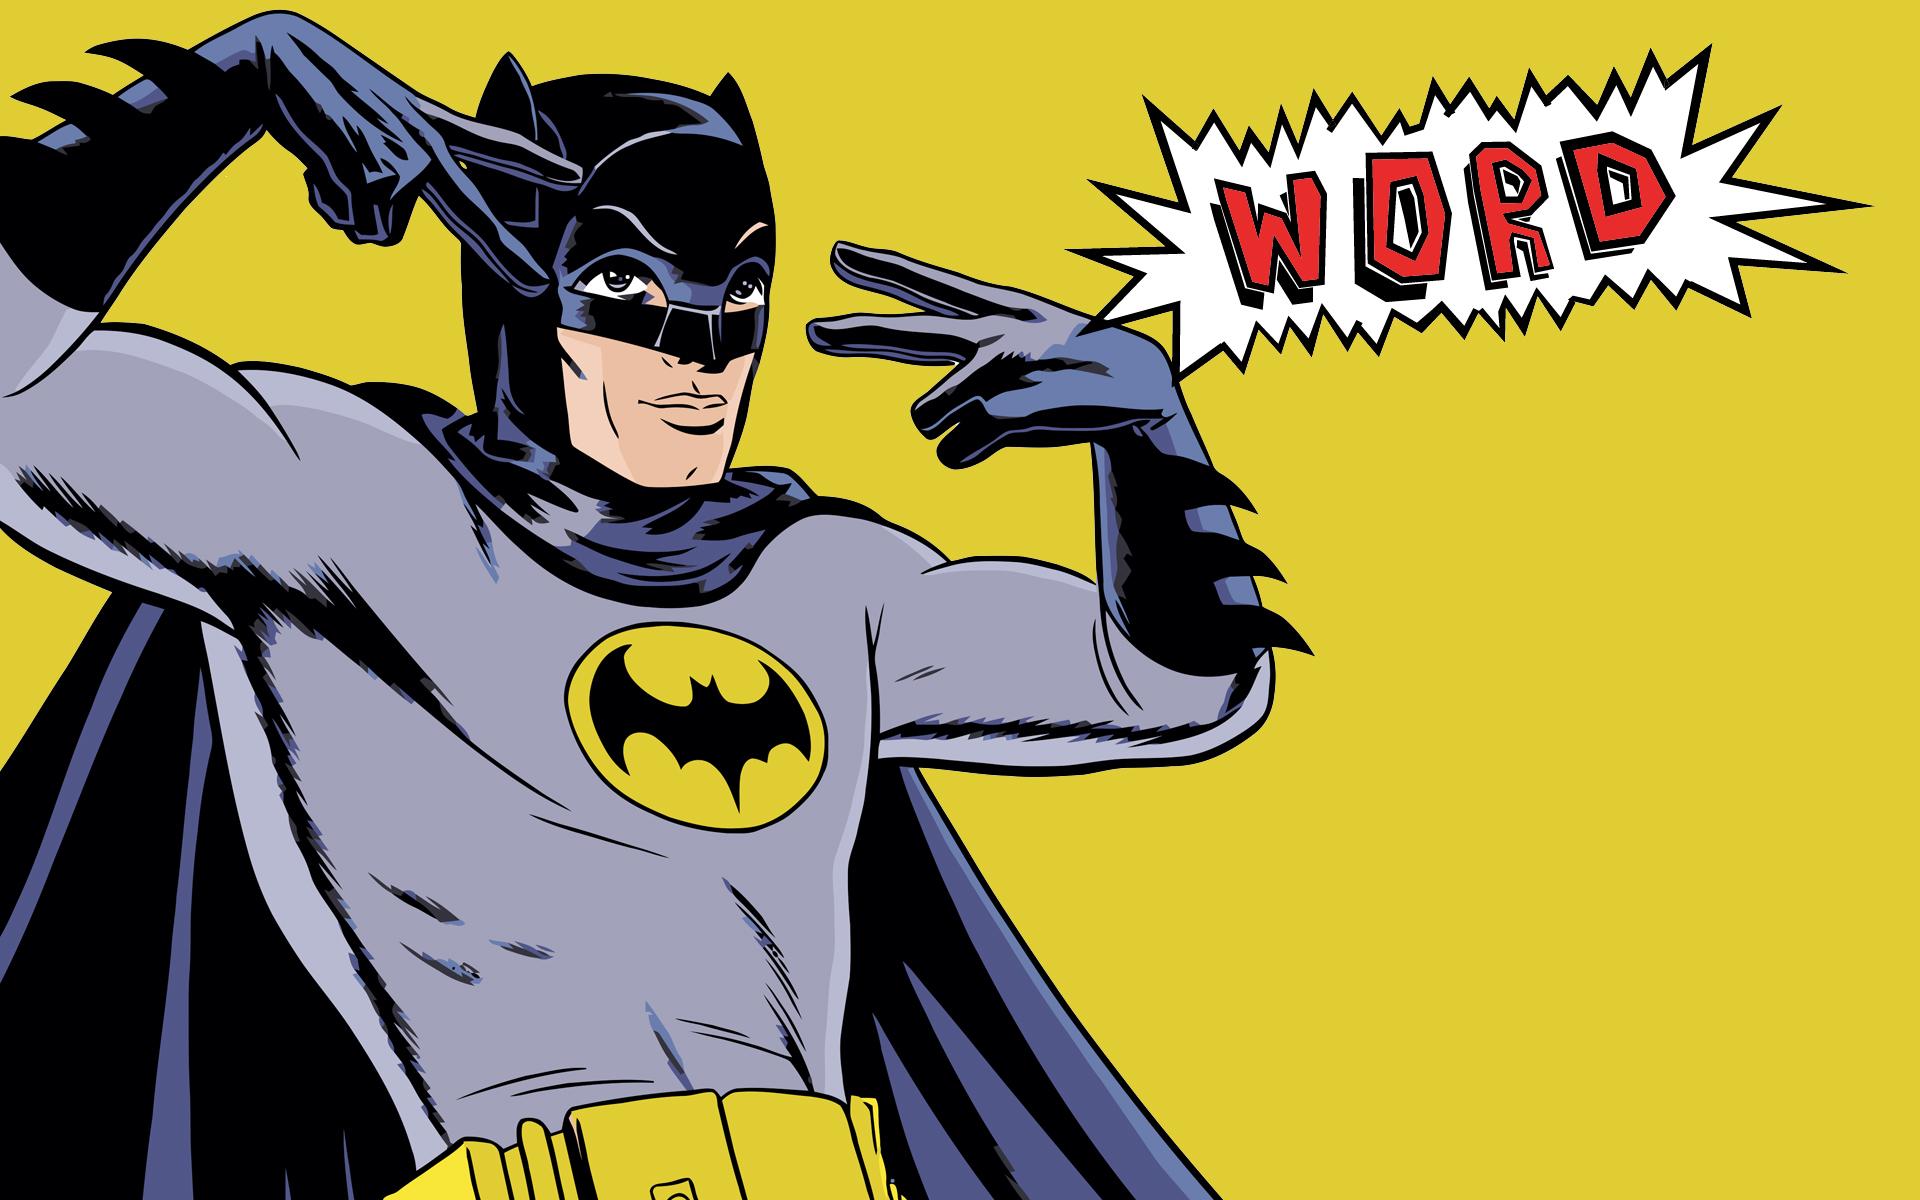 Funny Batman Hilarious Wallpaper Share This